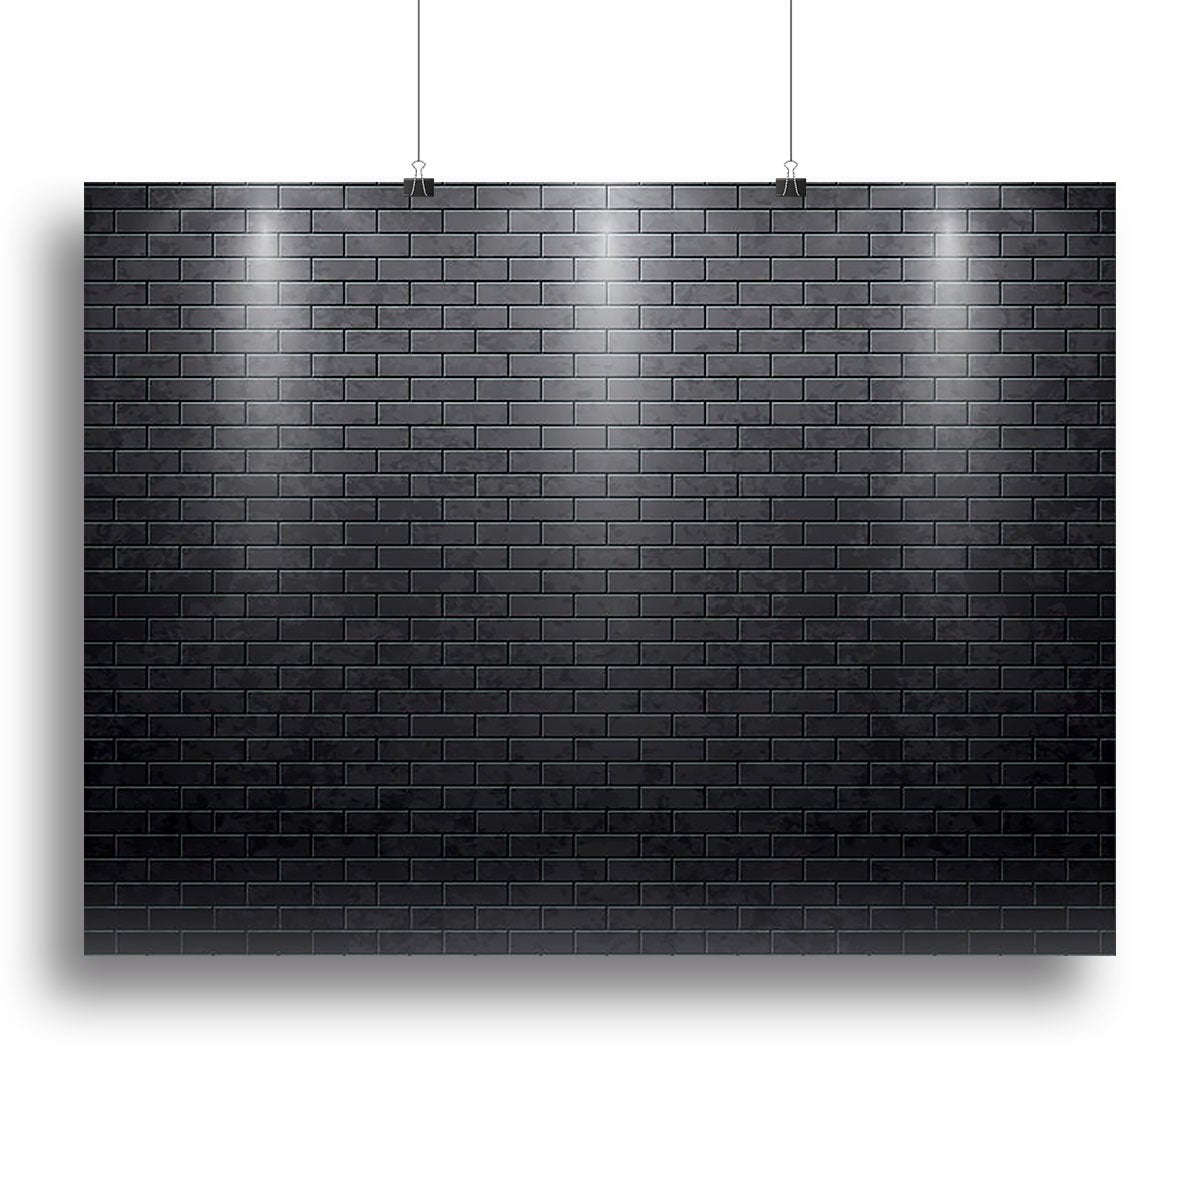 Illustartion of brick wall black Canvas Print or Poster